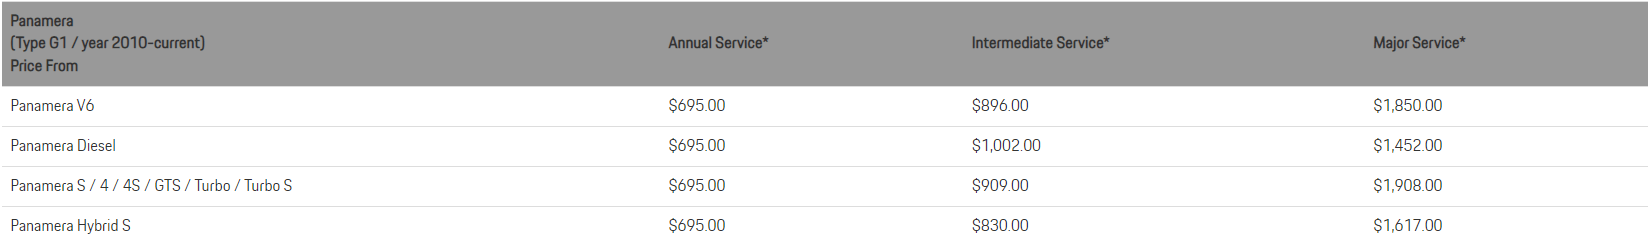 Panamera Service Pricing